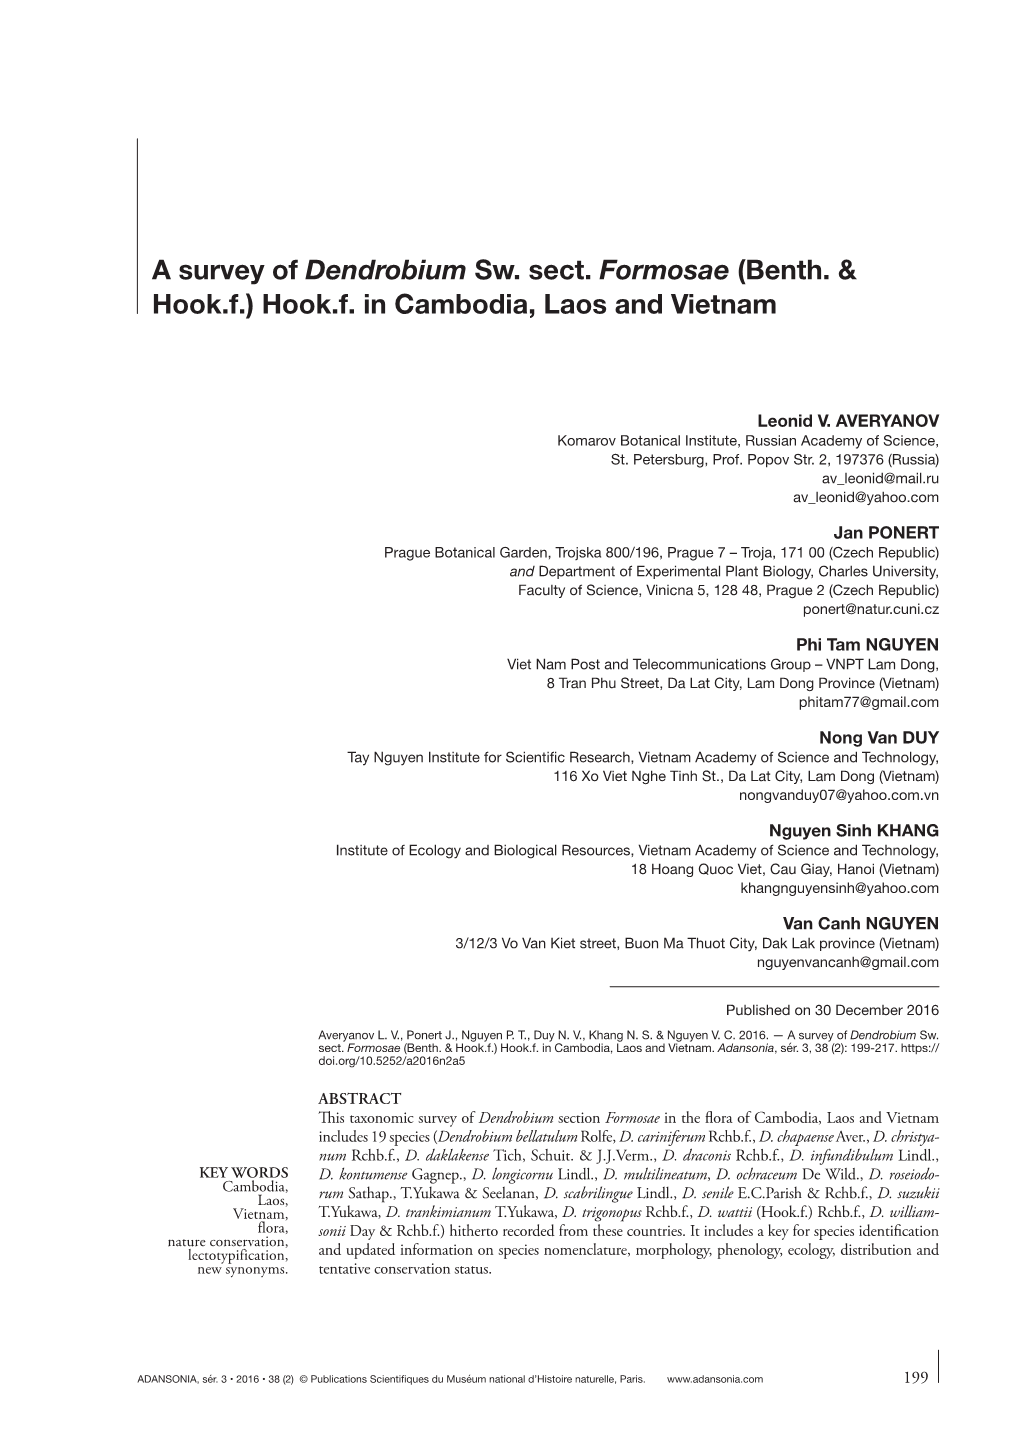 A Survey of Dendrobium Sw. Sect. Formosae (Benth. & Hook.F.)